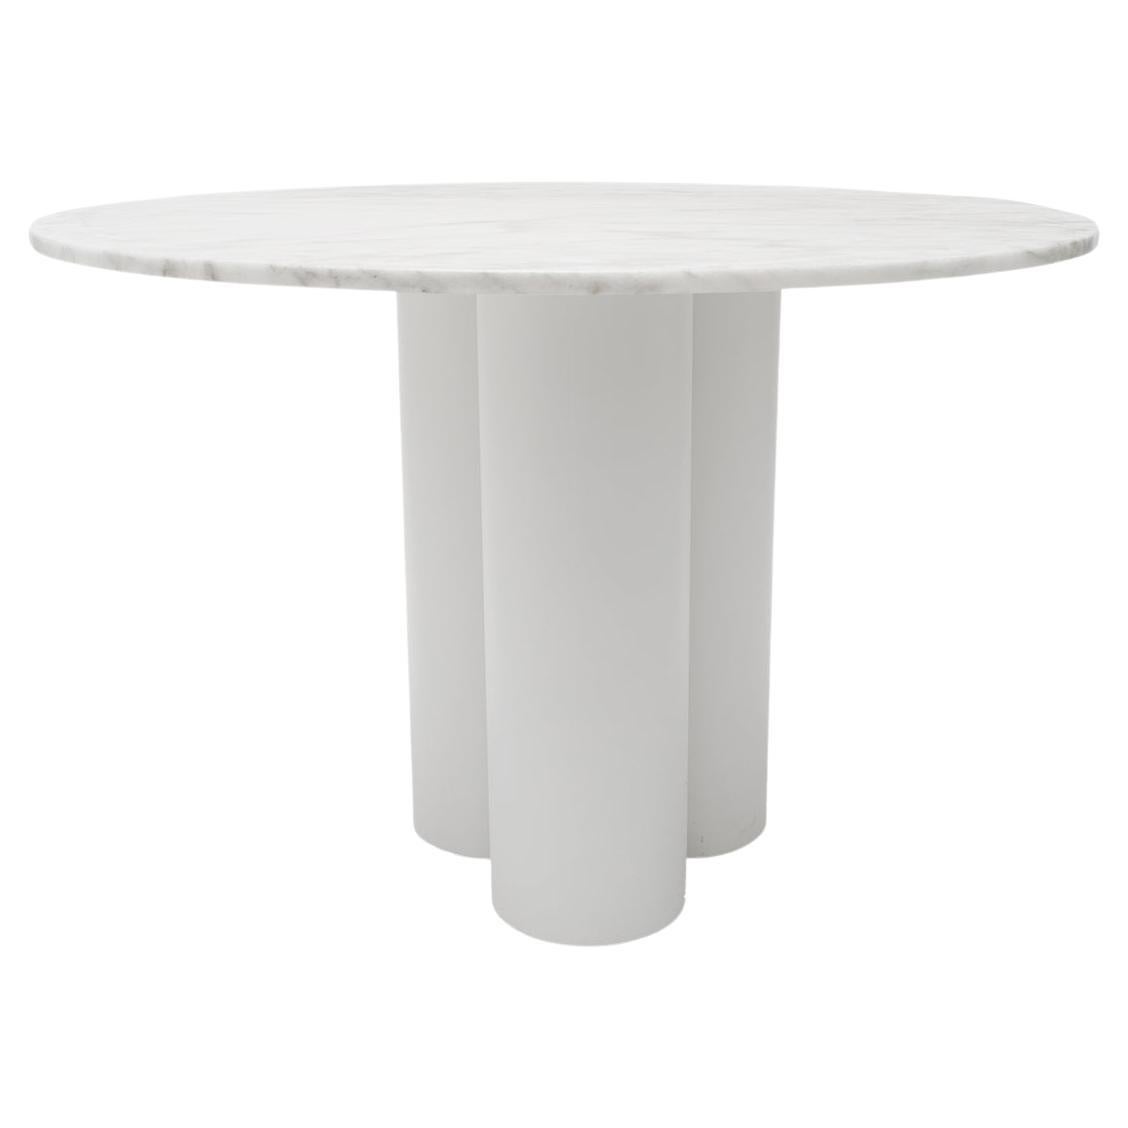 Objet rond 035 table en marbre par NG Design